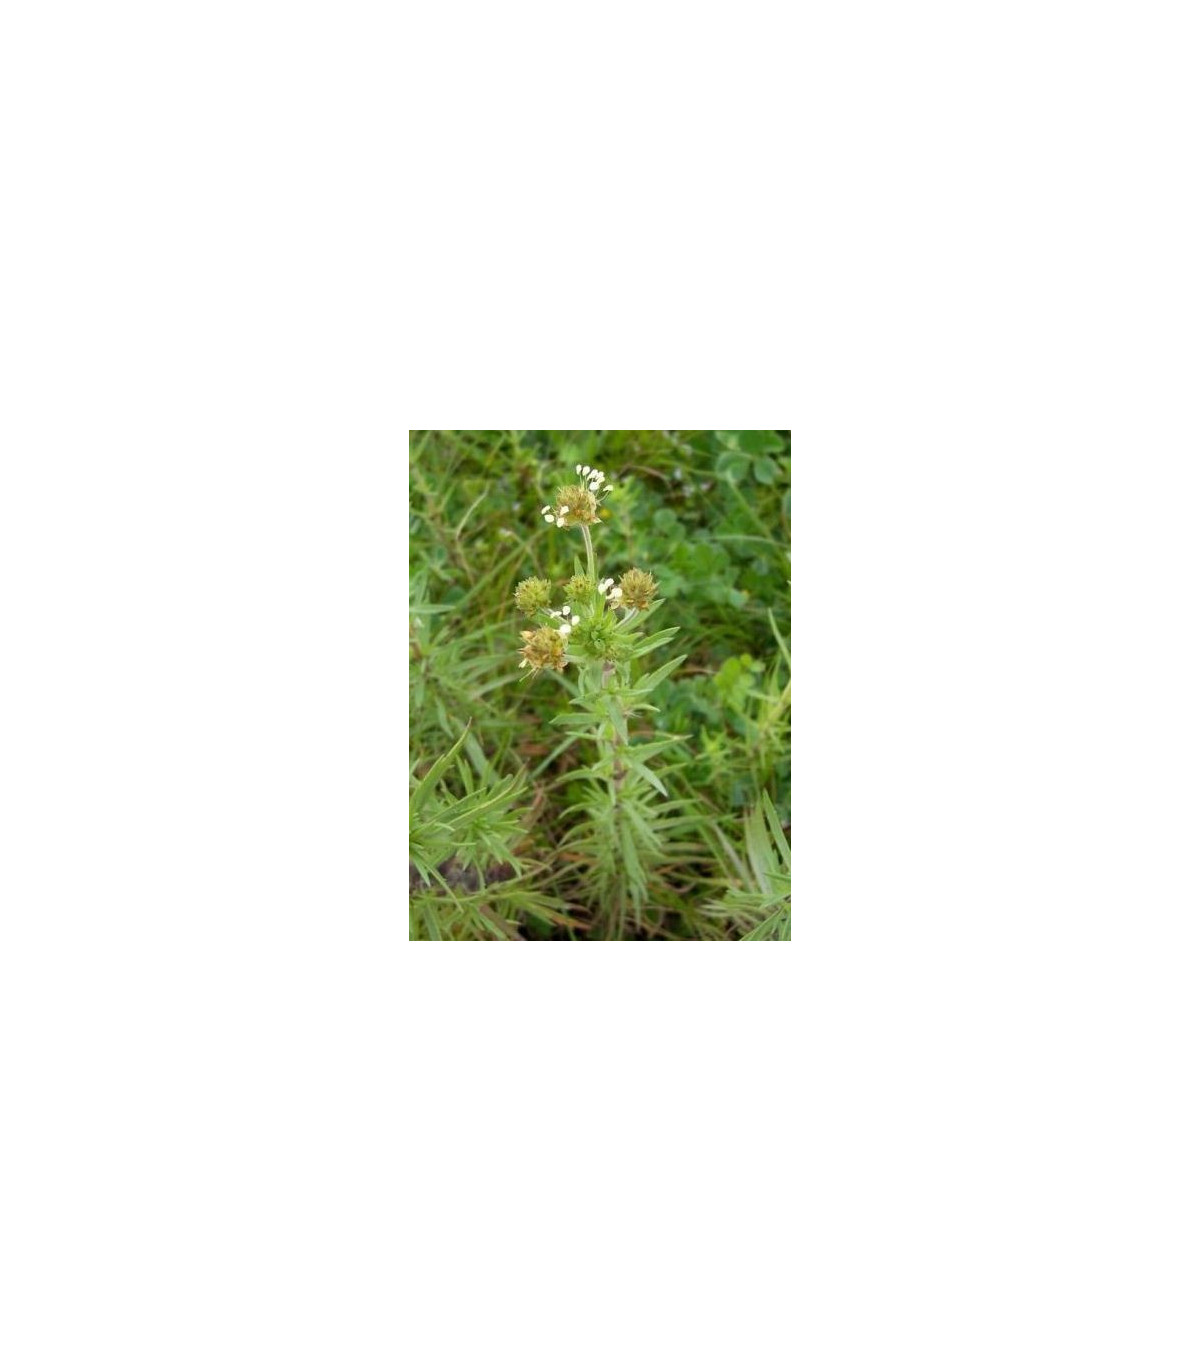 Skorocel indický - Plantago psyllium - semená - 40 ks